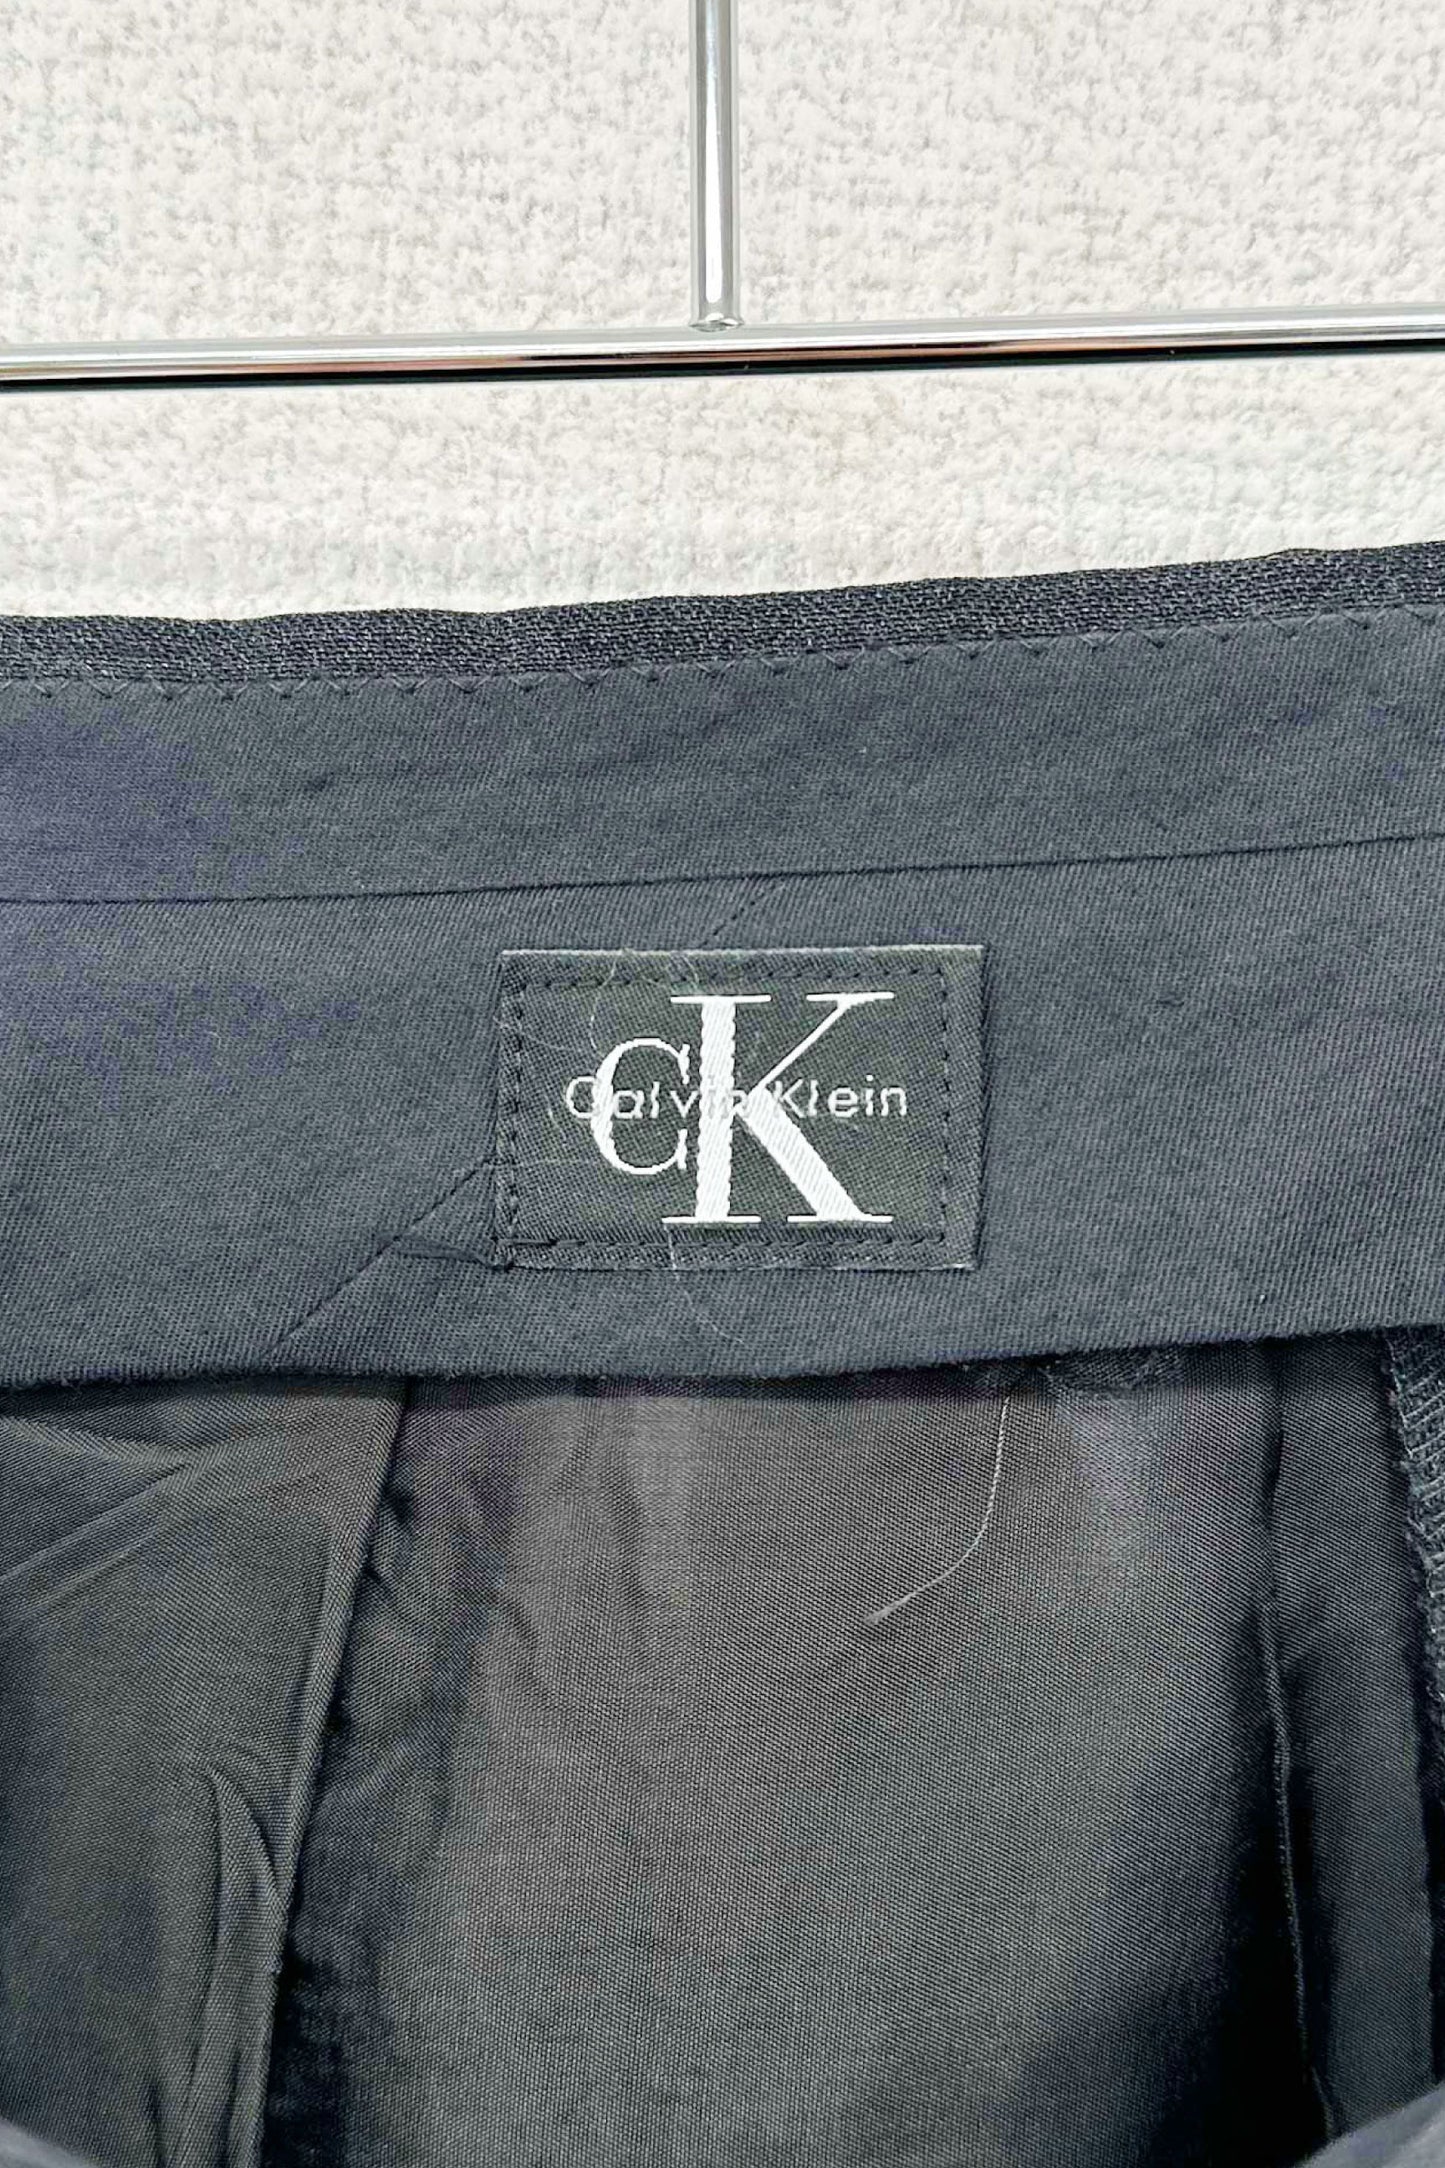 90's Calvin Klein charcoal gray slacks